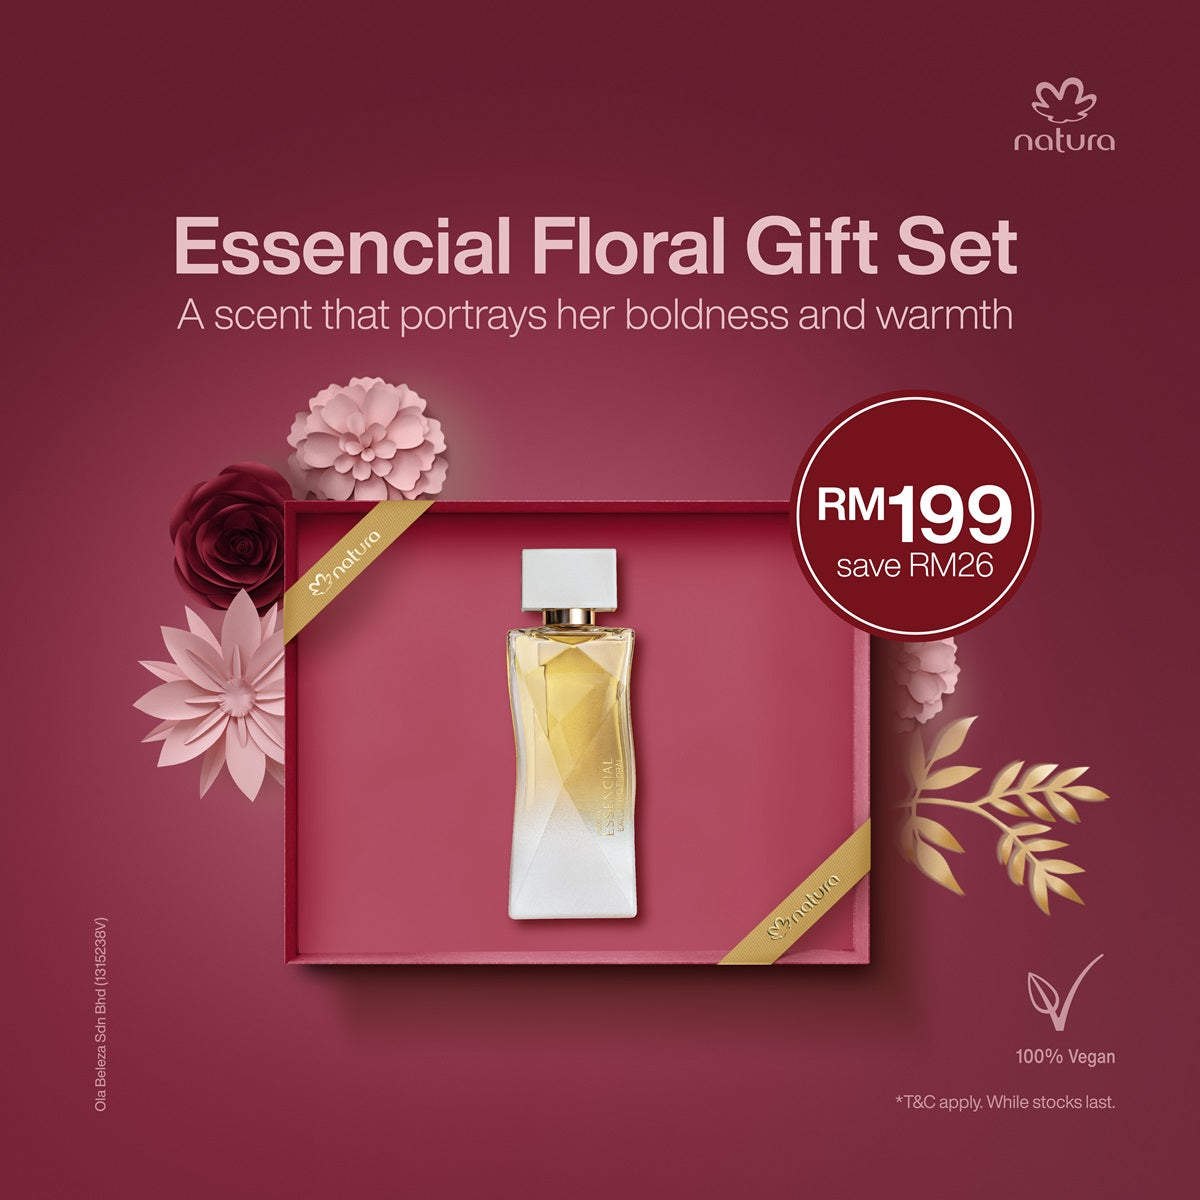 Essencial Floral Gift Set